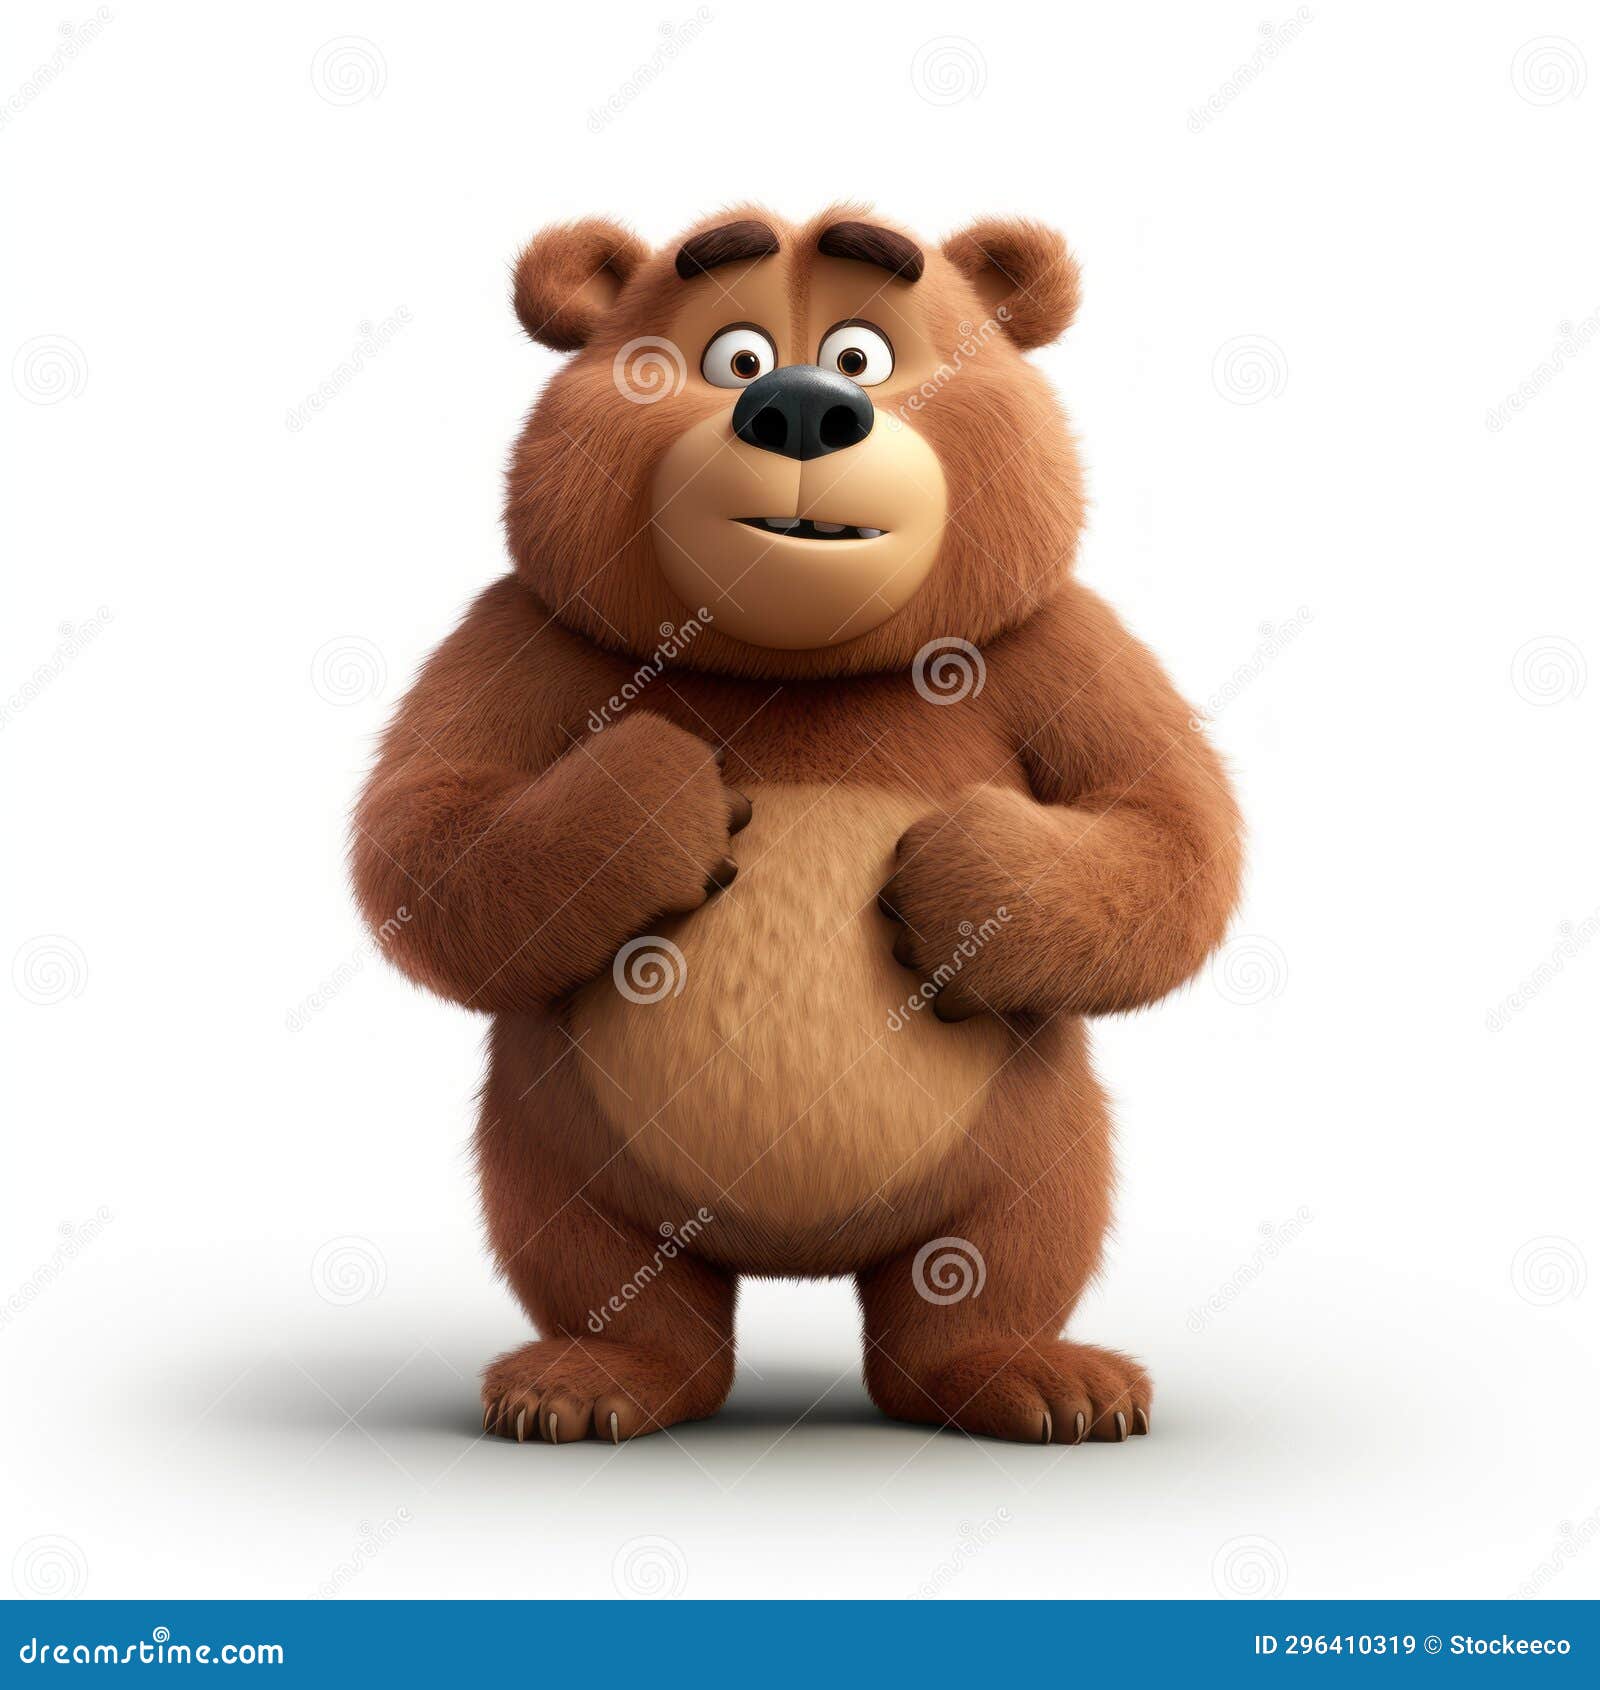 3d bear character image in frameless - cartoon style